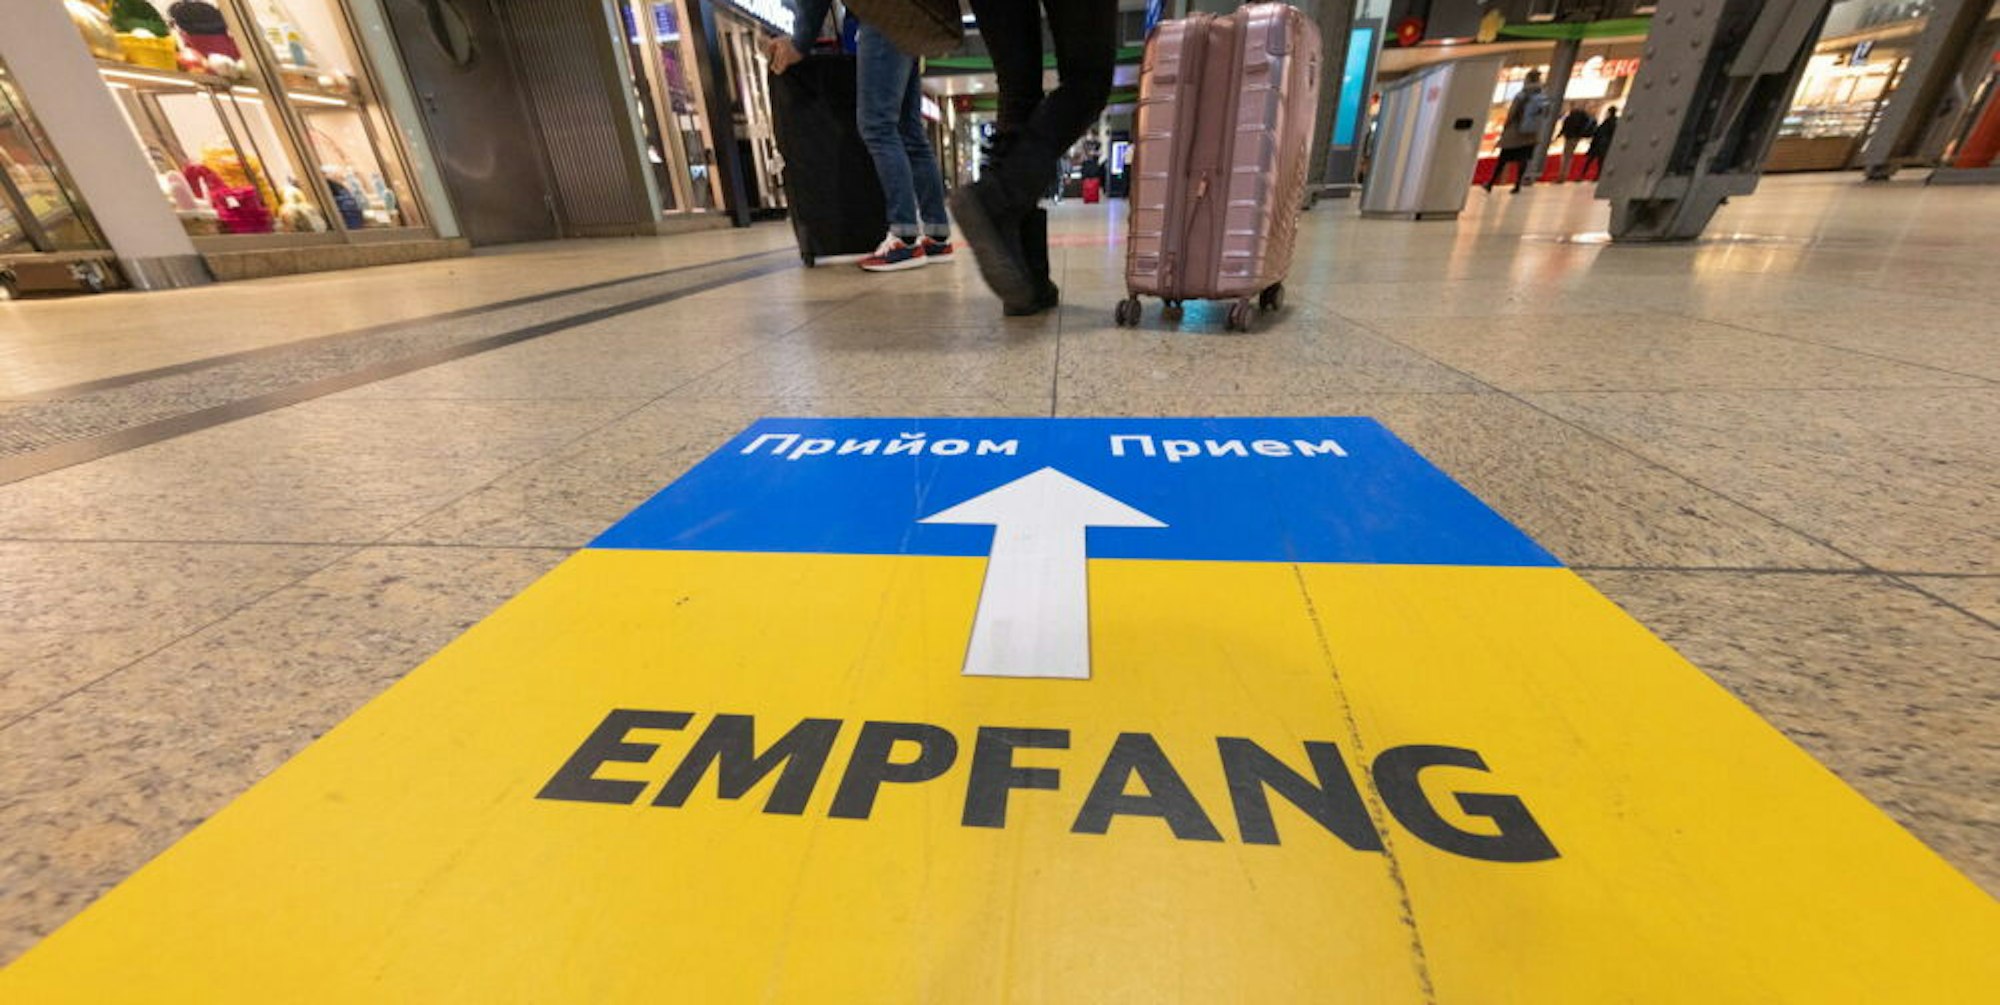 Am Hauptbahnhof kommen täglich 70 Ukraineflüchtlinge an.